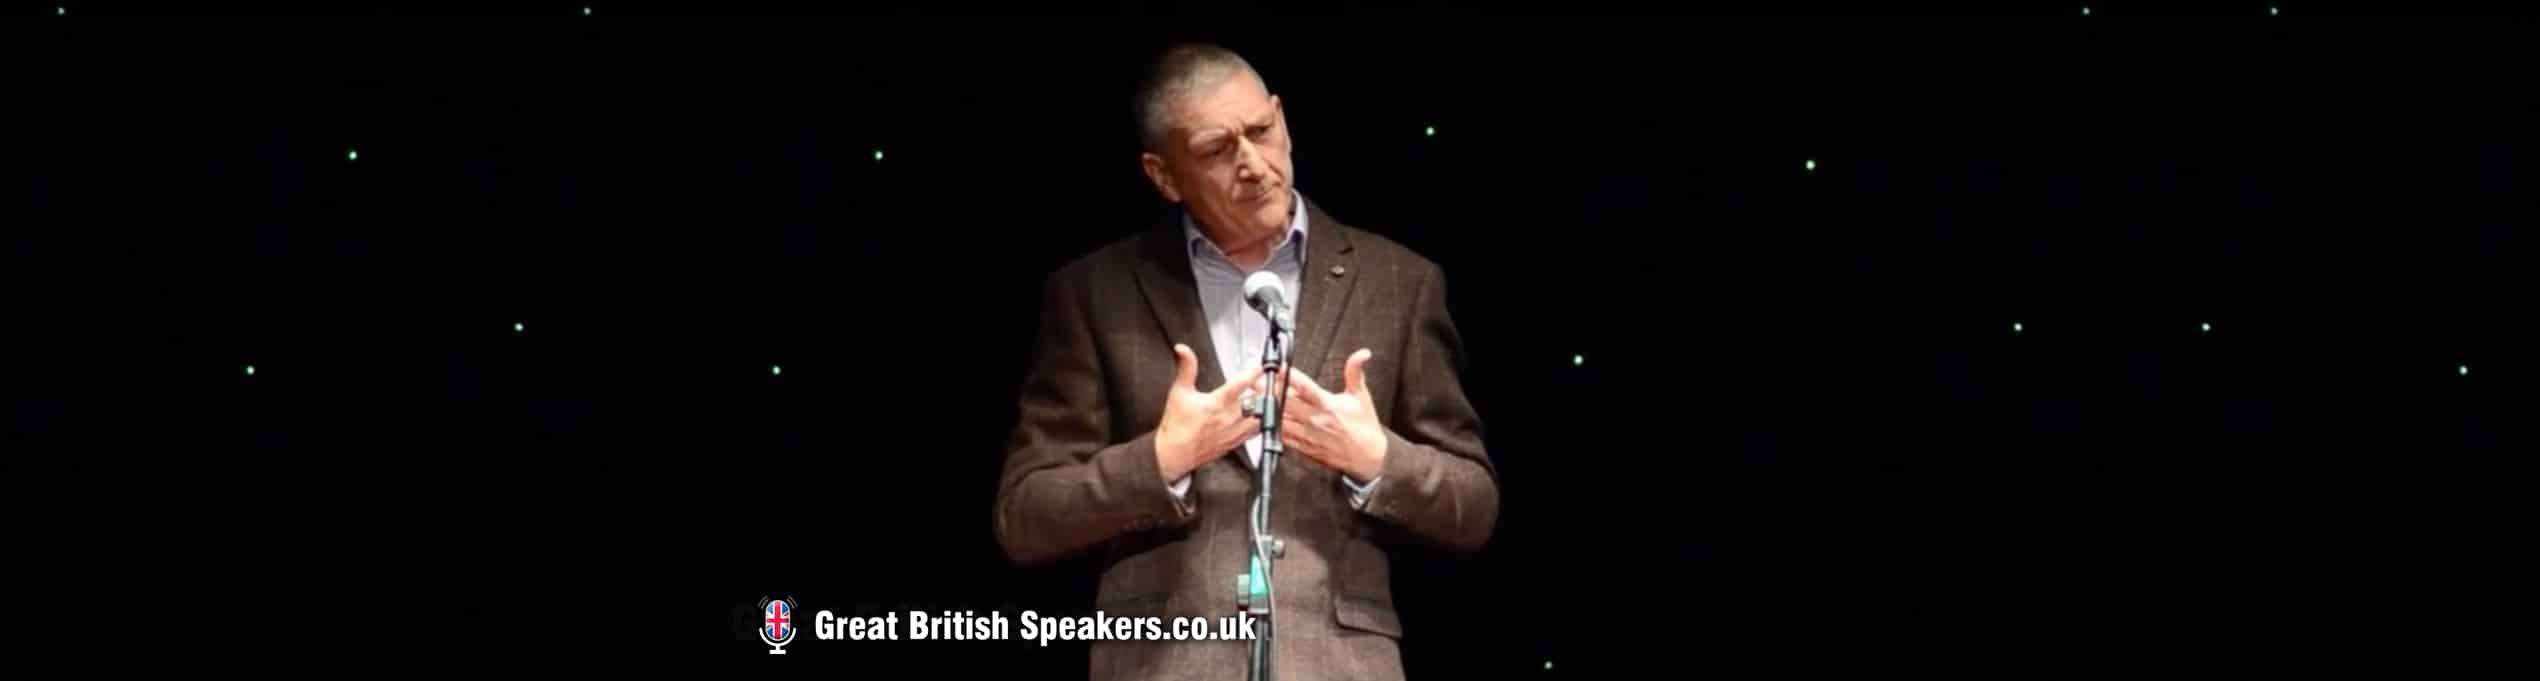 Andrew Thorp Storyteller speaker coach mentor consultant at Great British Speakers